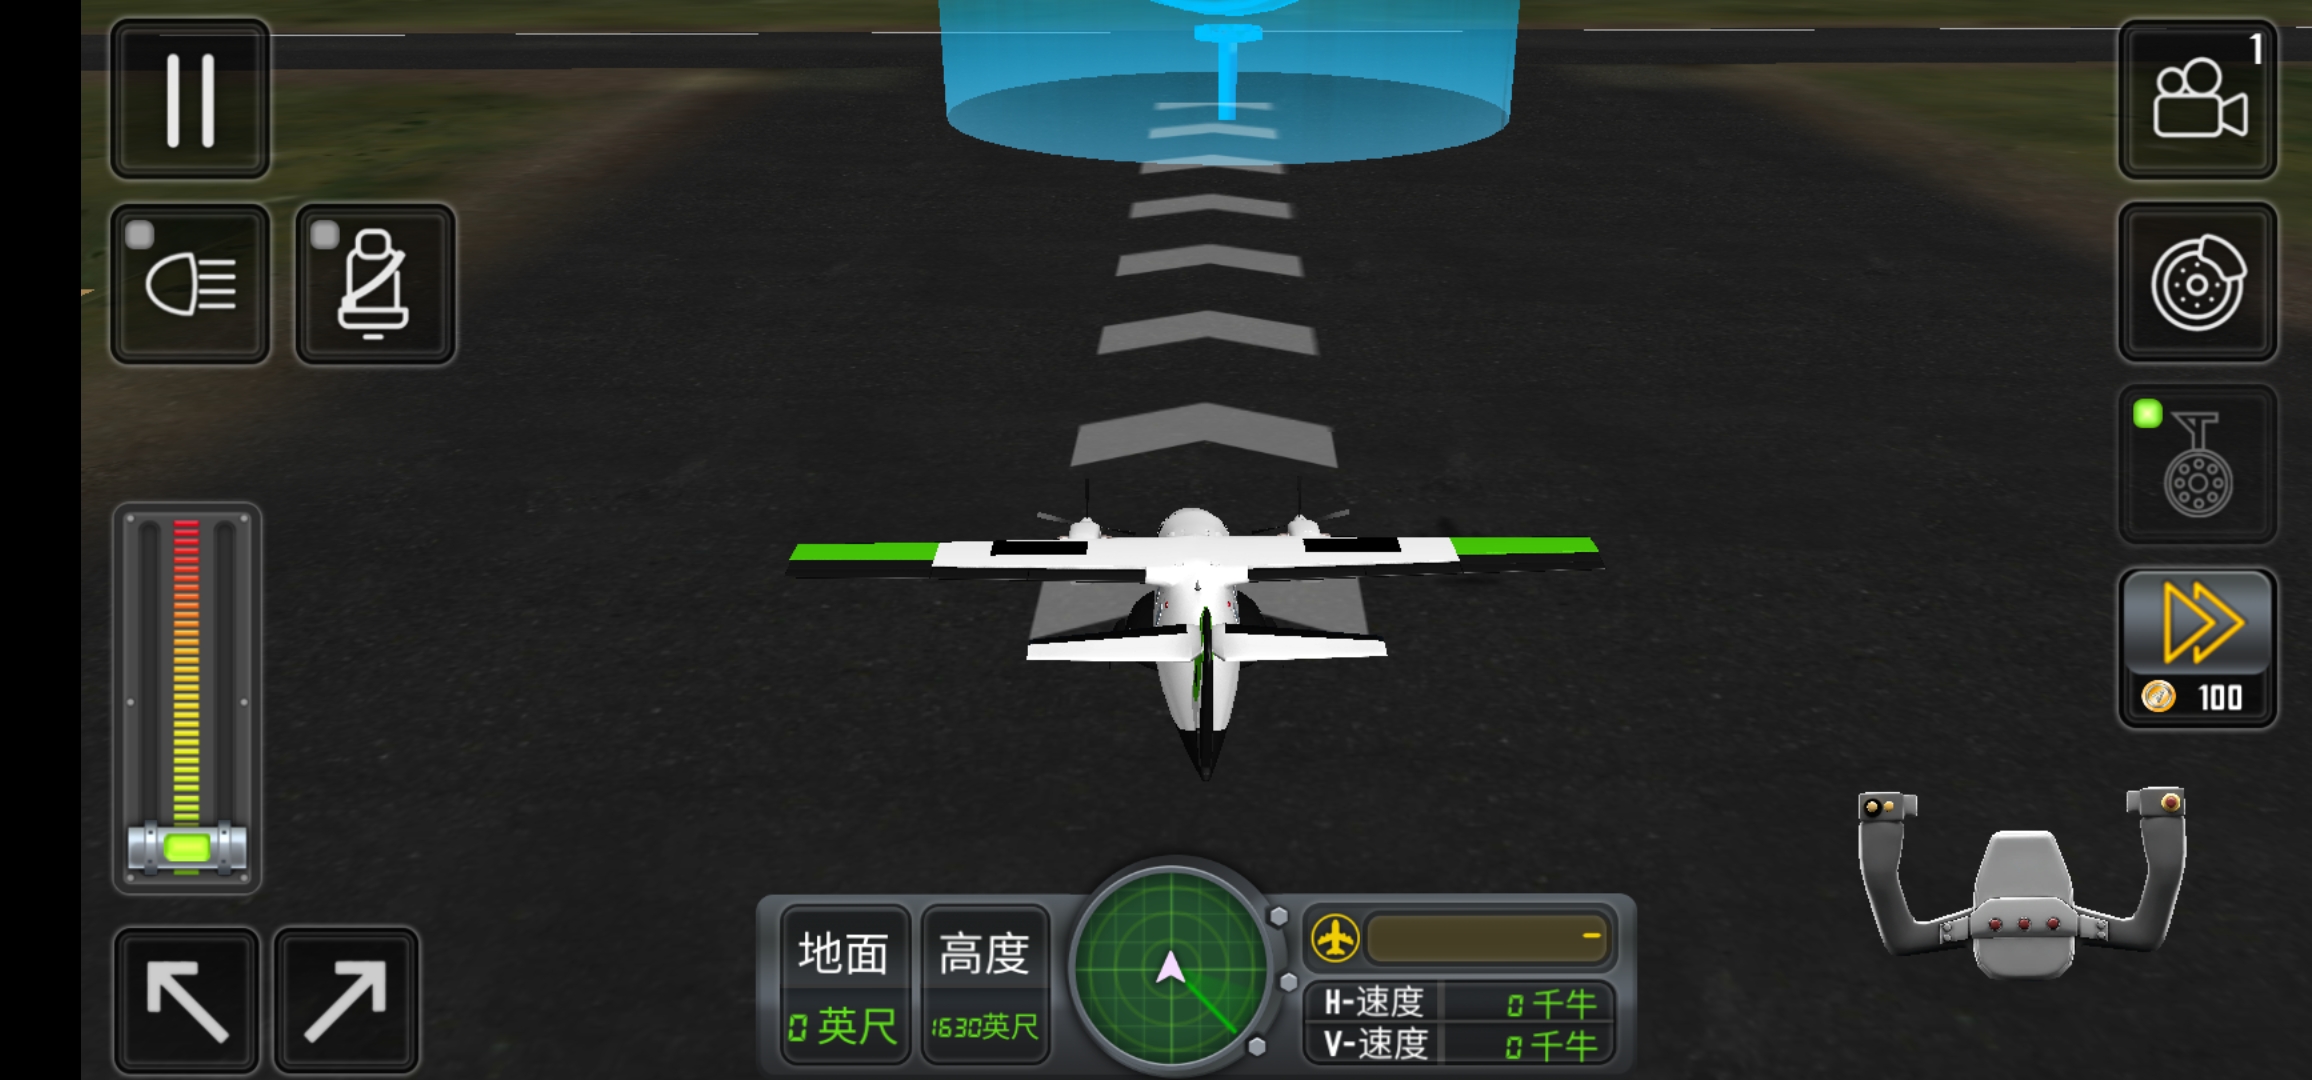 Aircraft rescue simulator